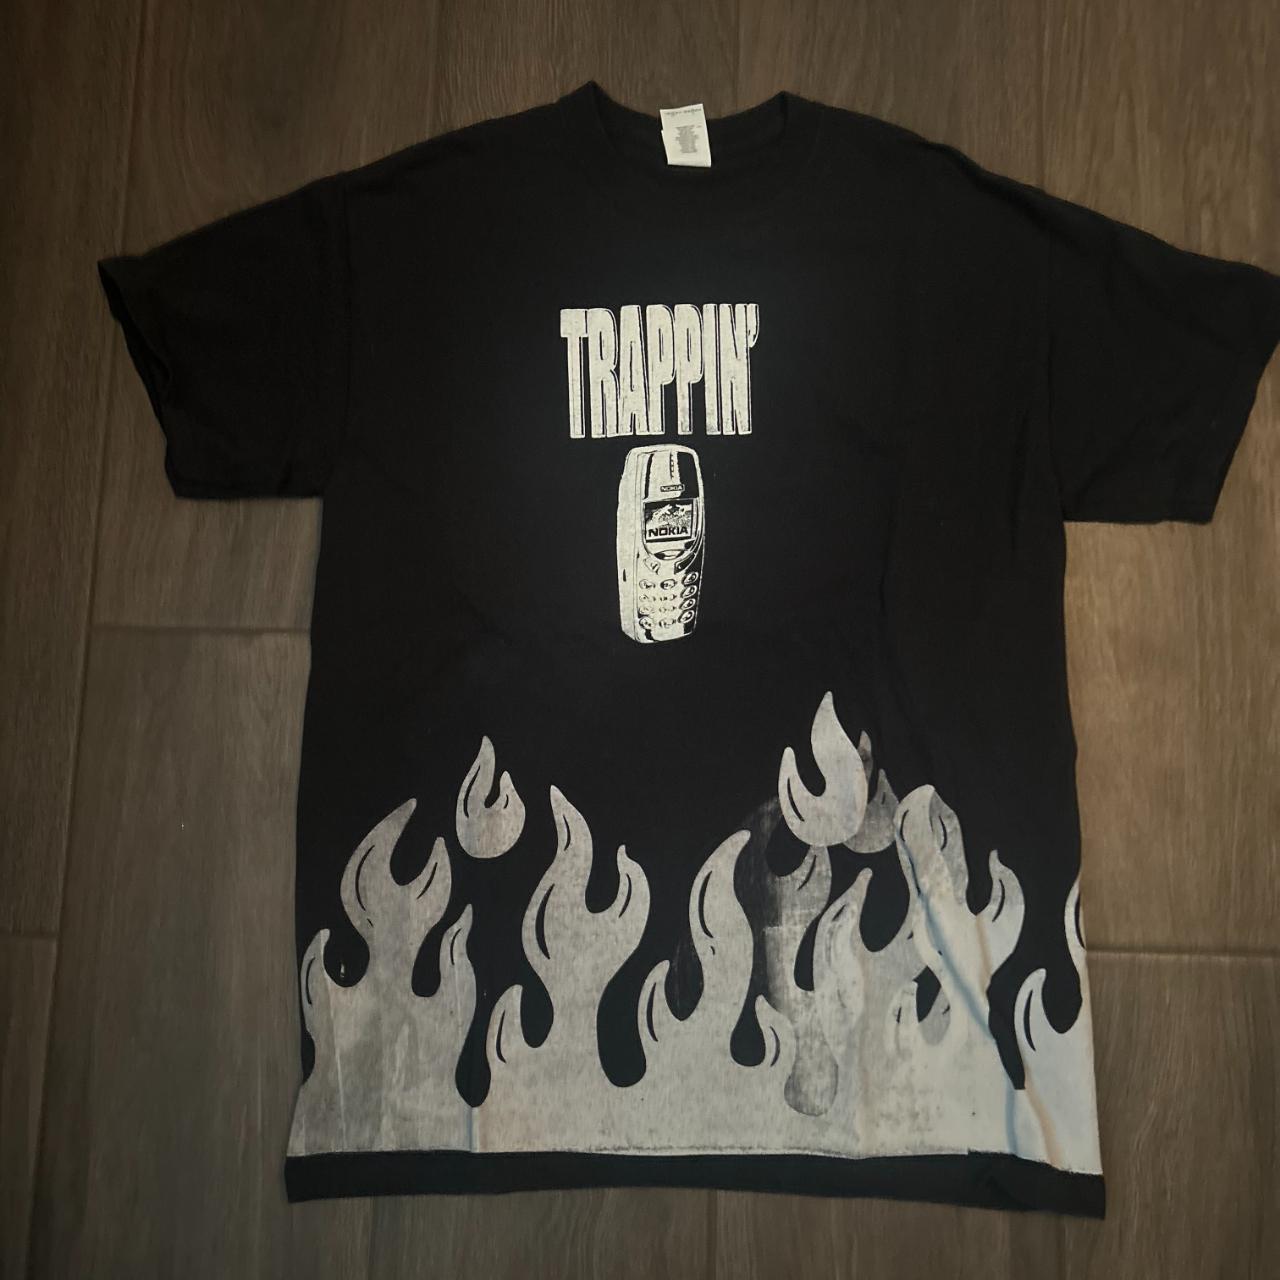 Trapstar - Trapstar - T-Shirt